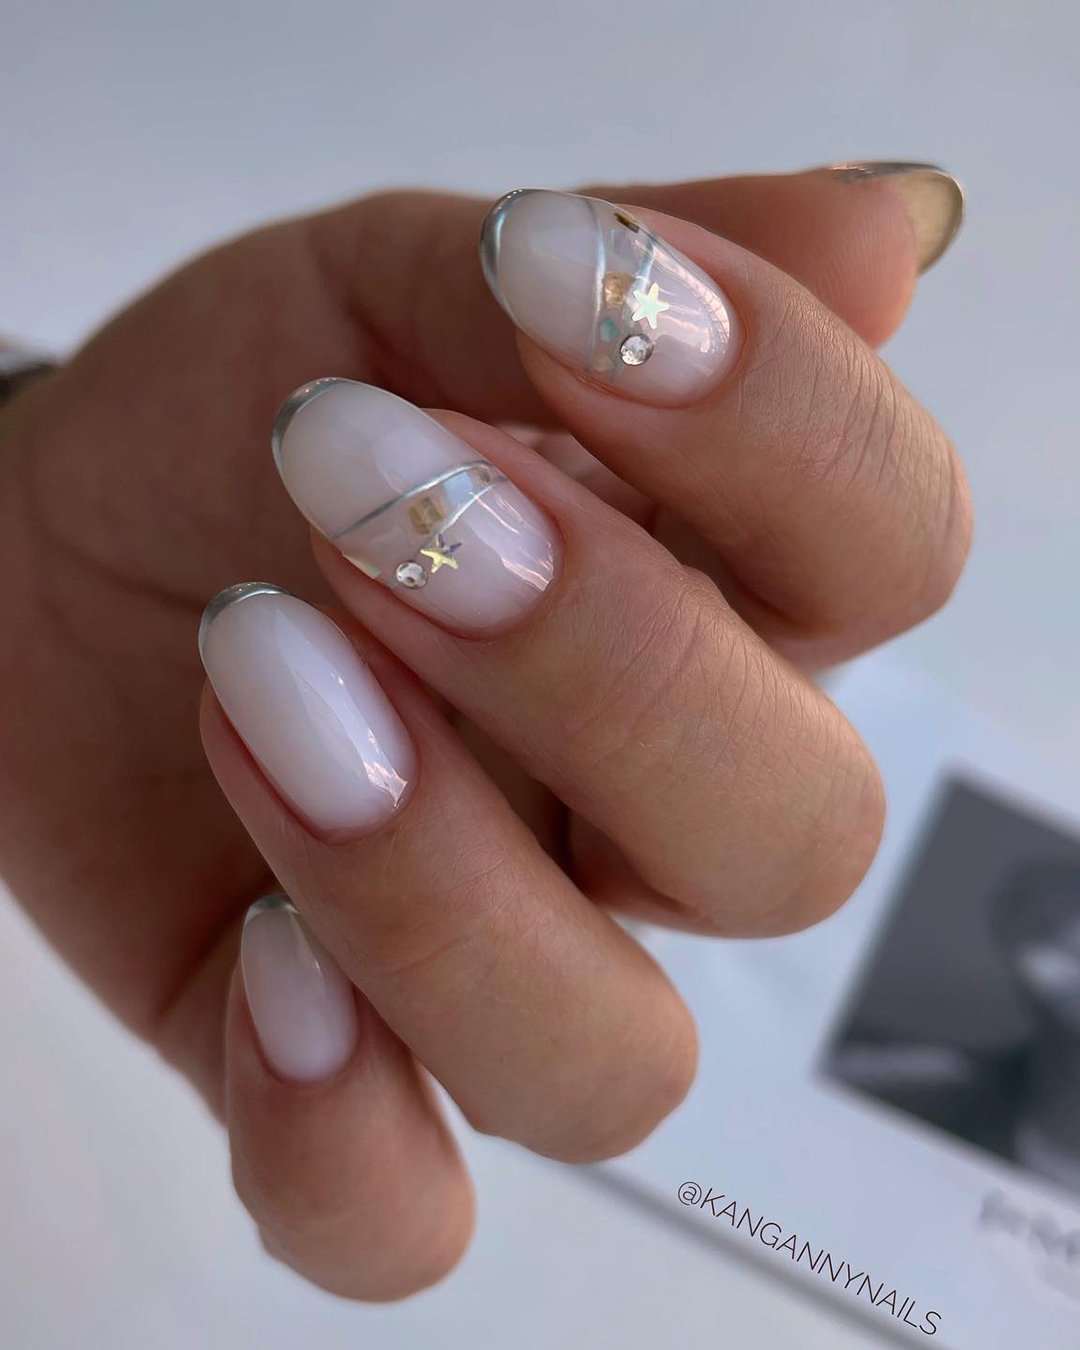 white nail designs white transparent with silver design kangannynails